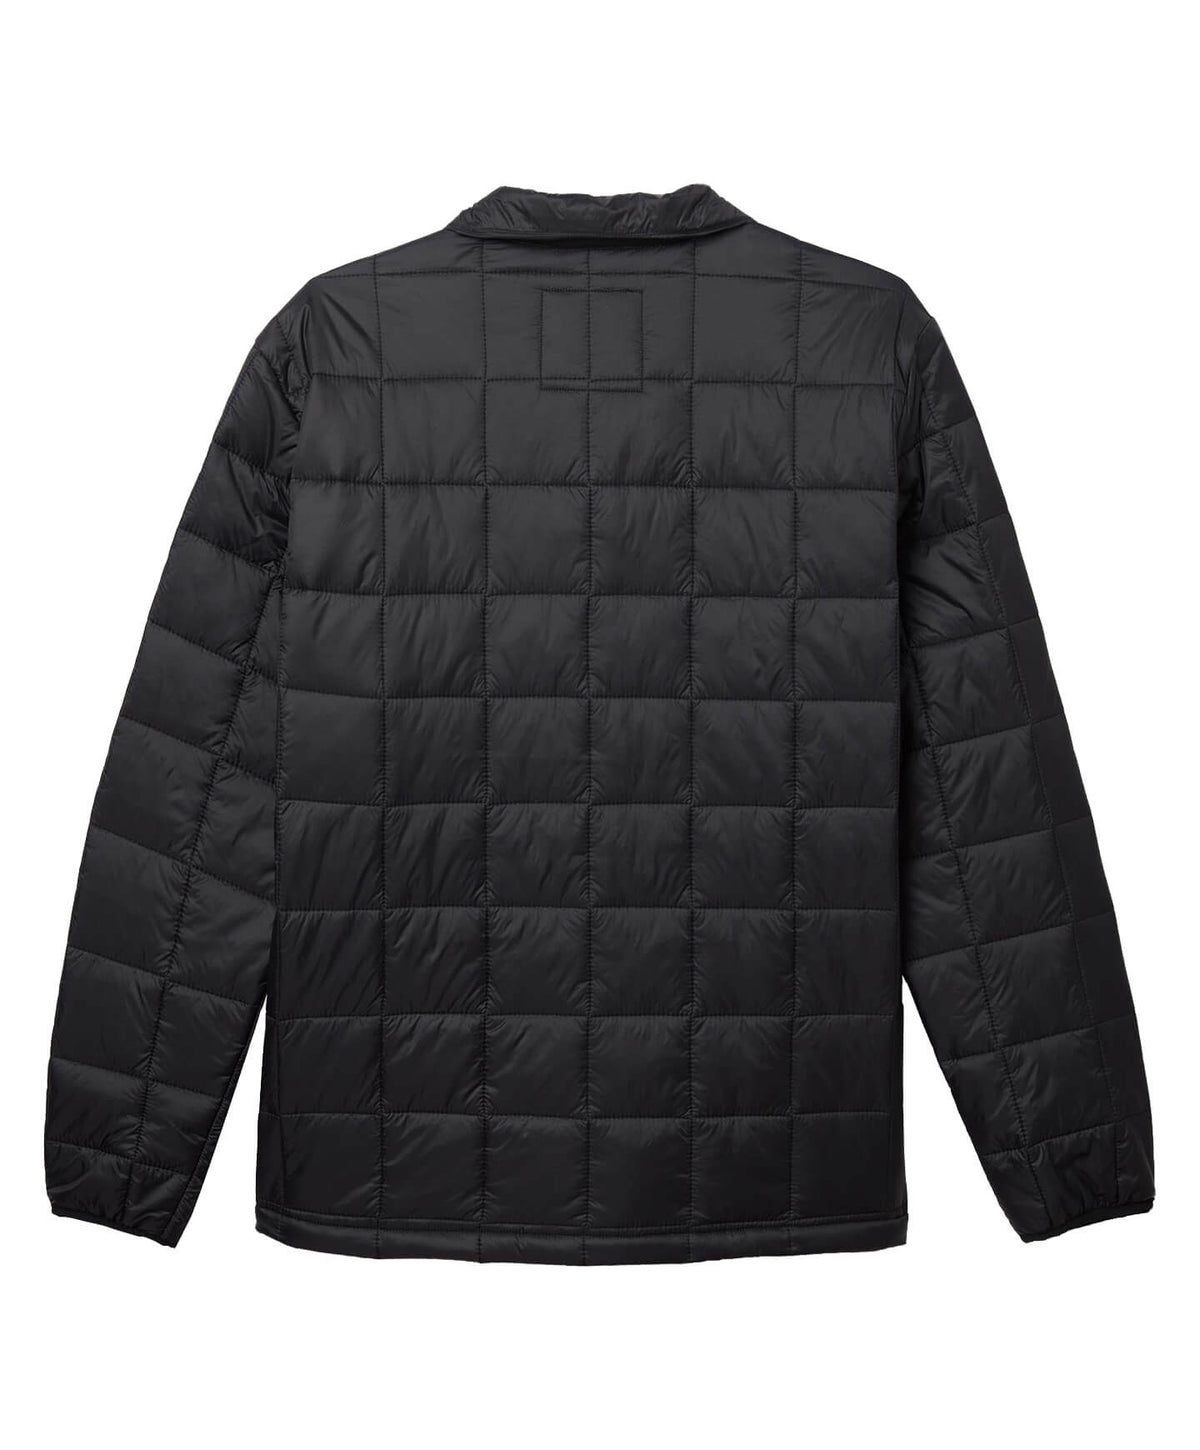 TRVLR Away Packable Jacket - Black